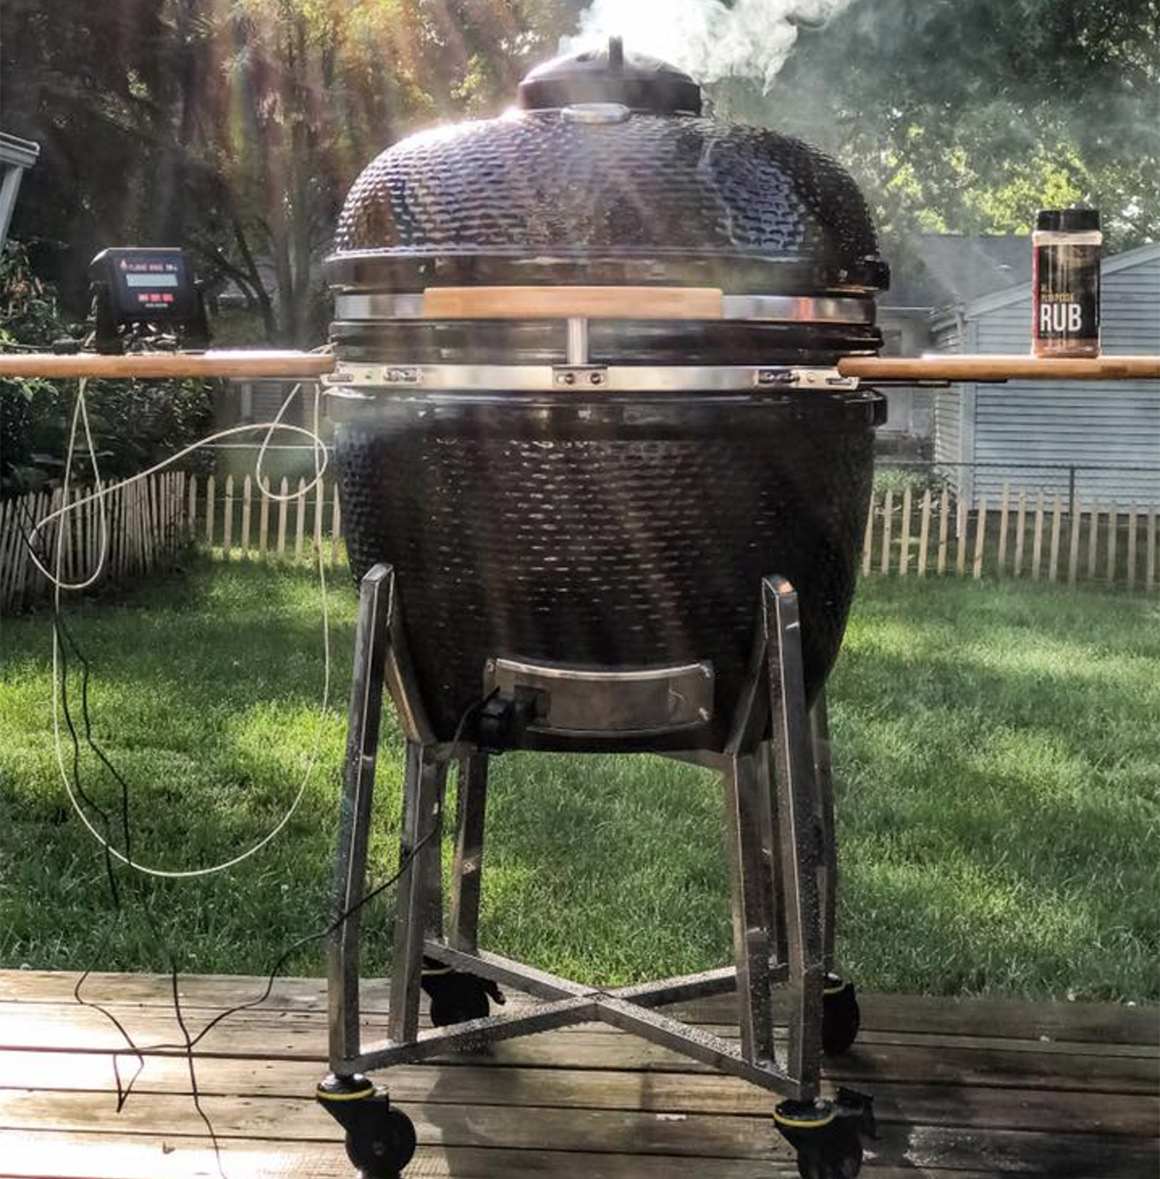 a grilla grills kamado grill in a backyard